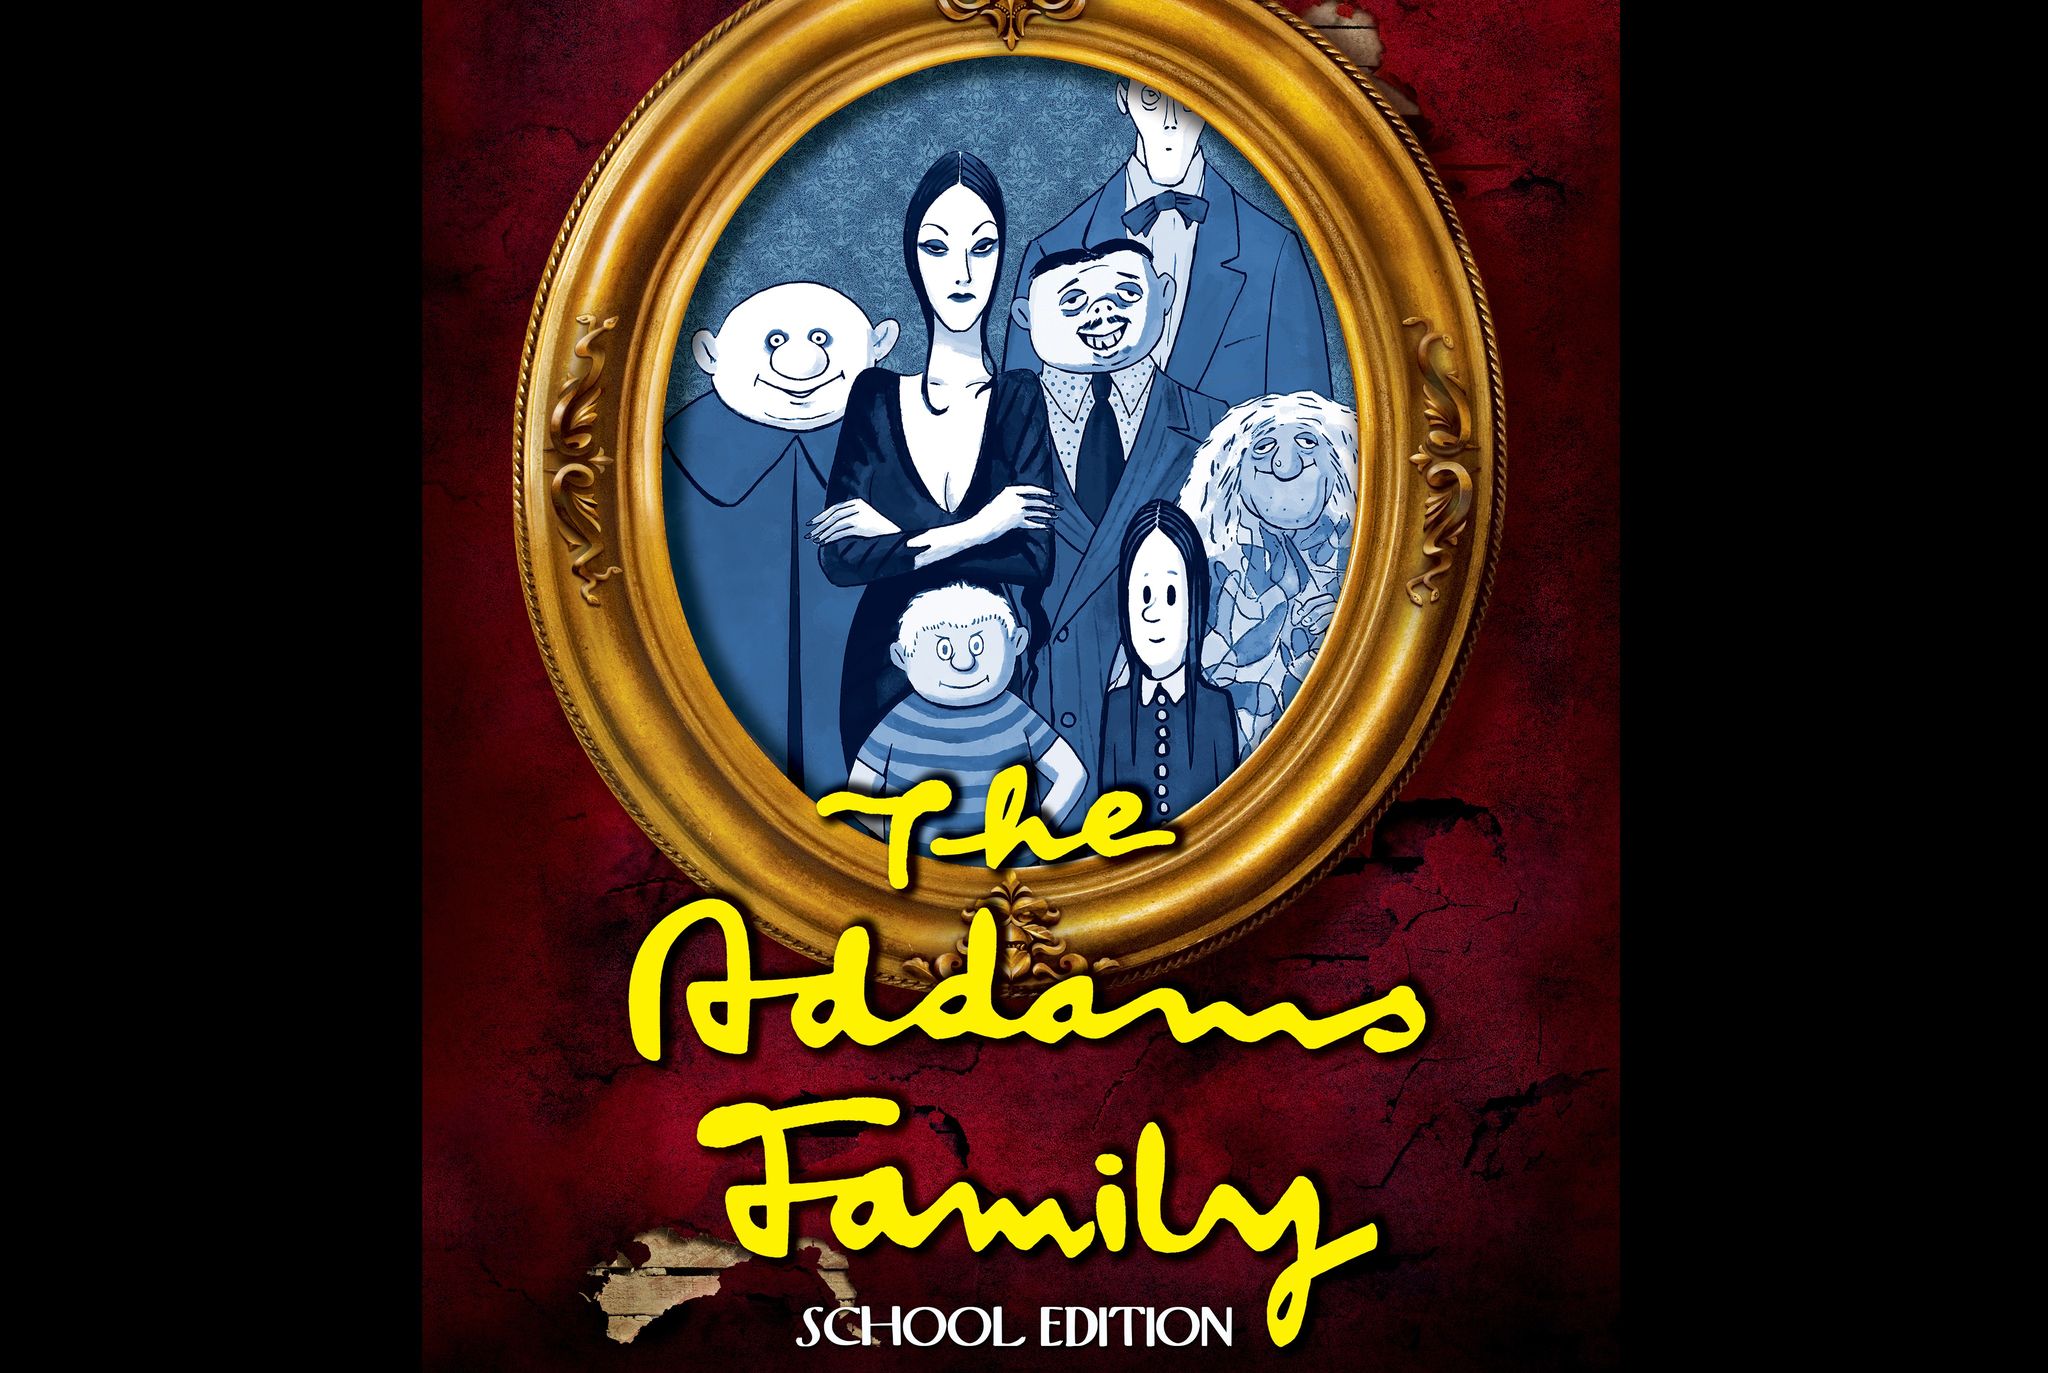 Addams Family School Edition